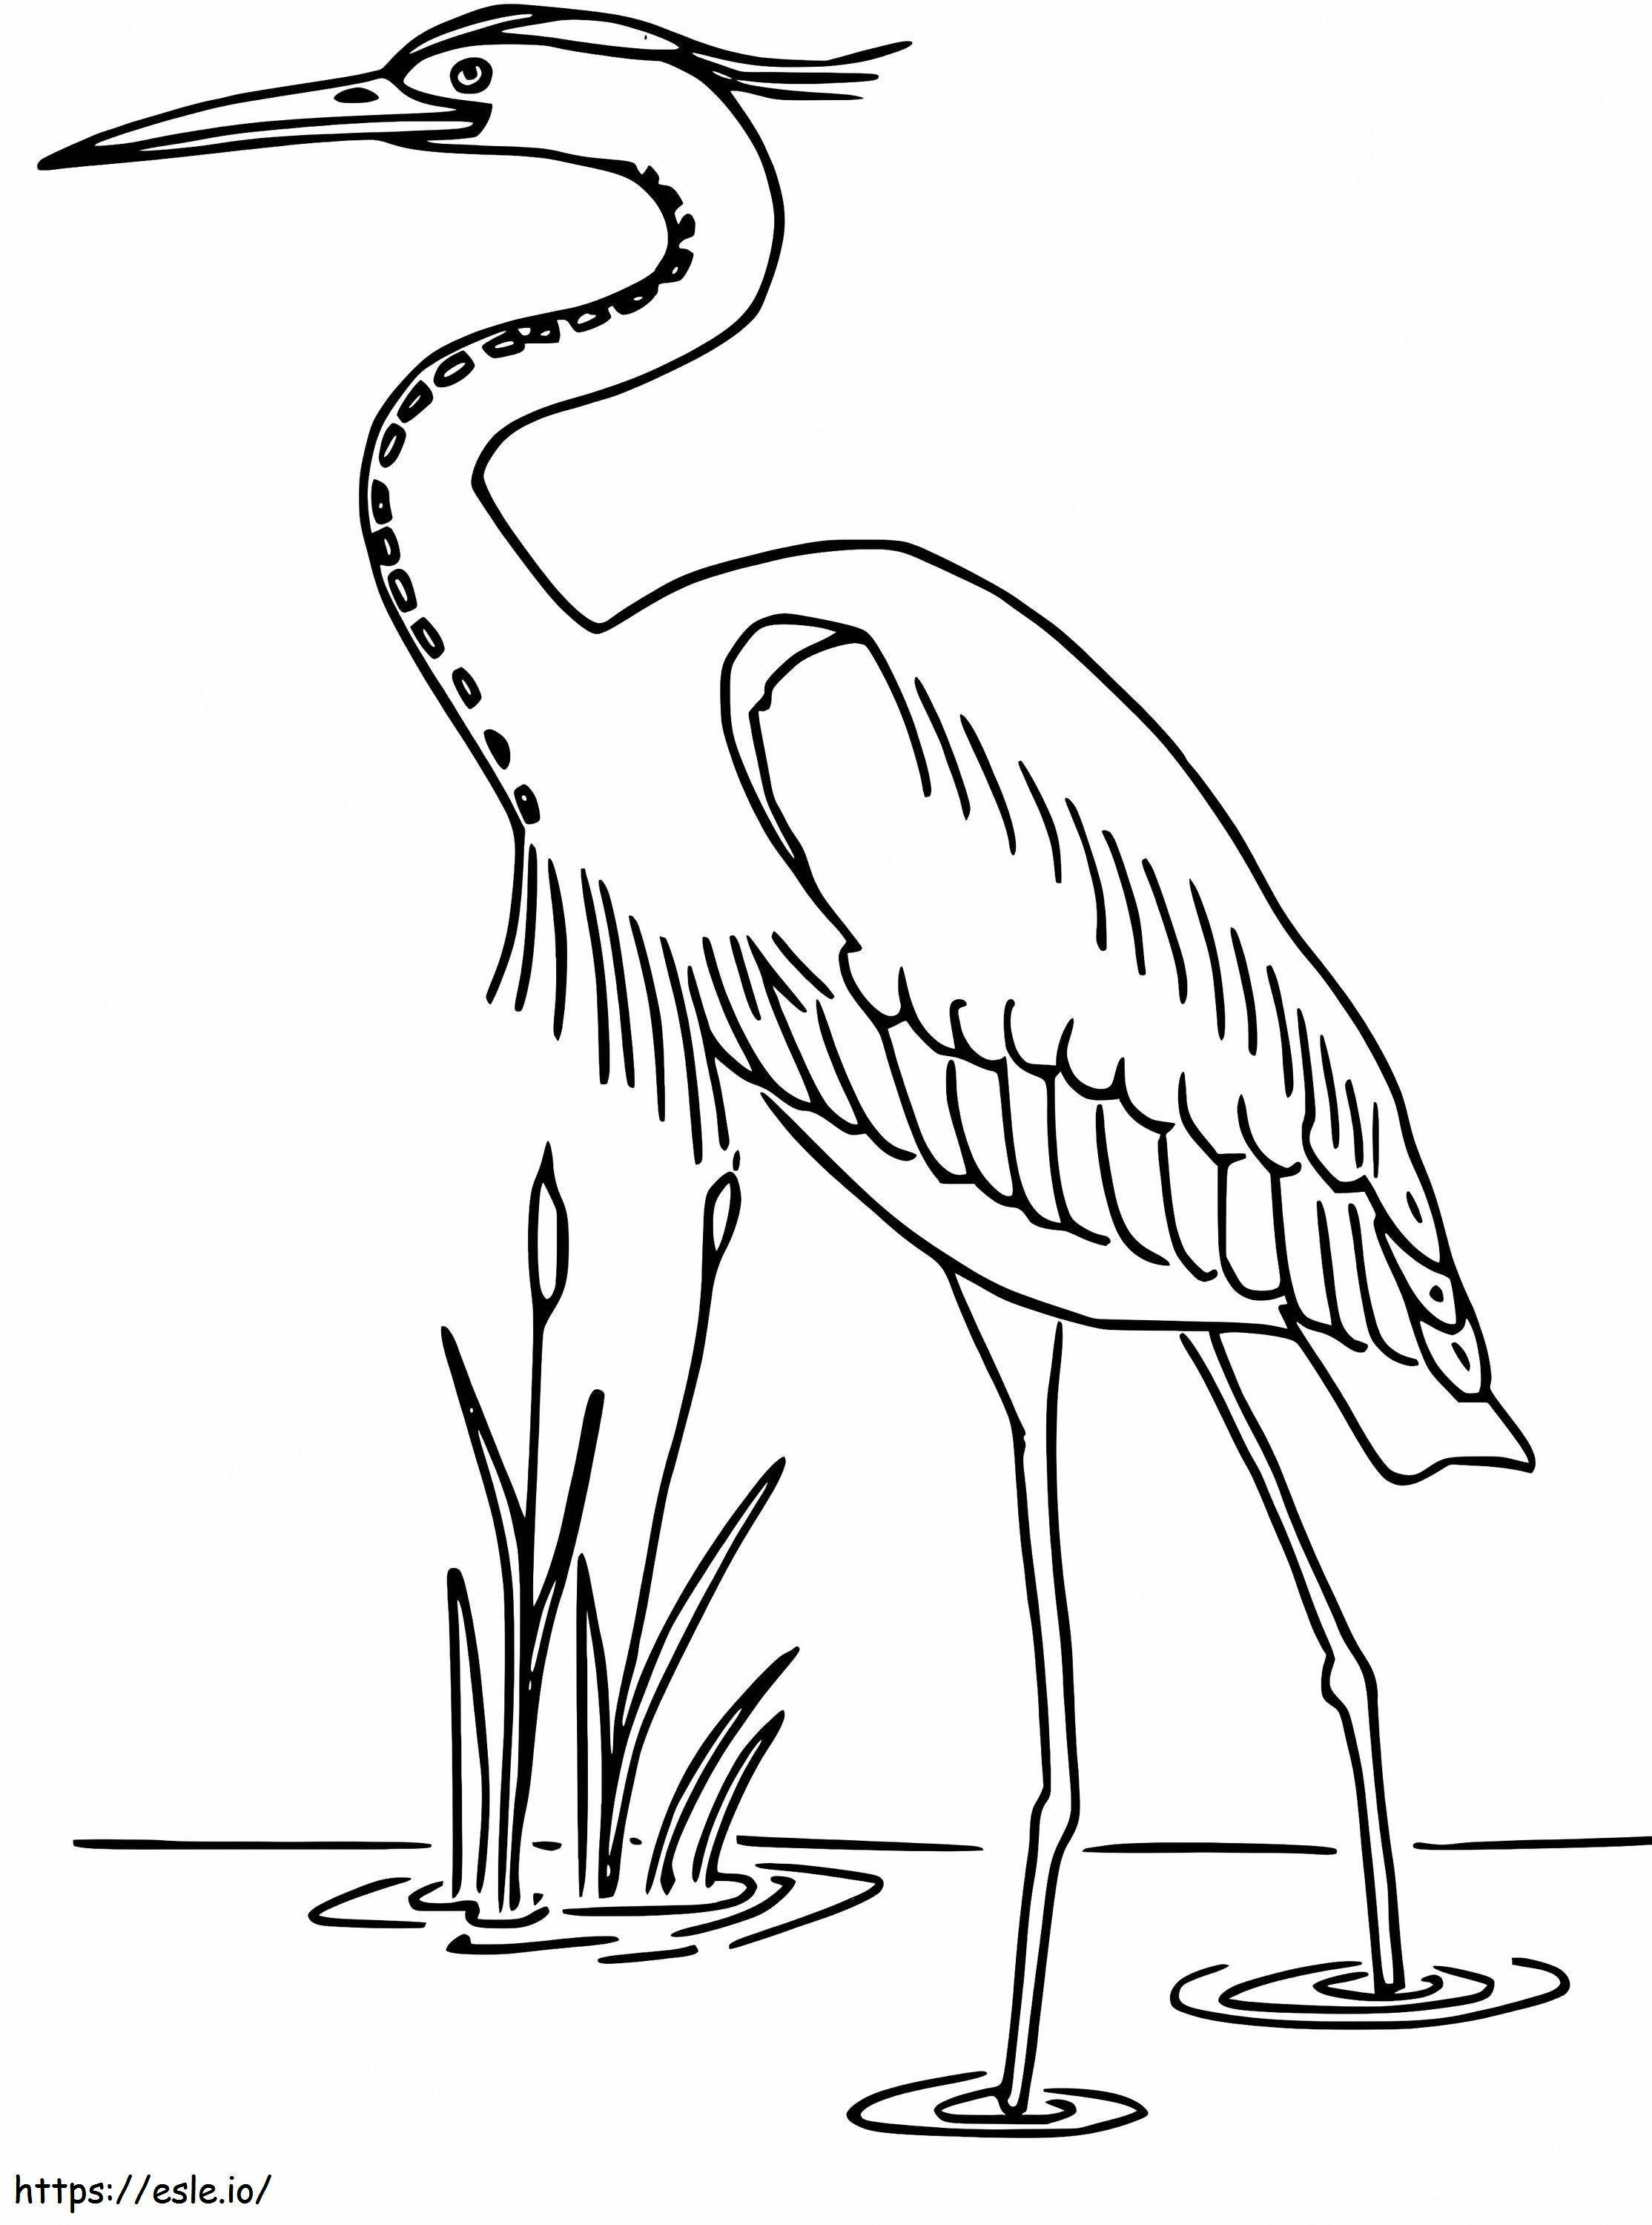 Heron 3 coloring page